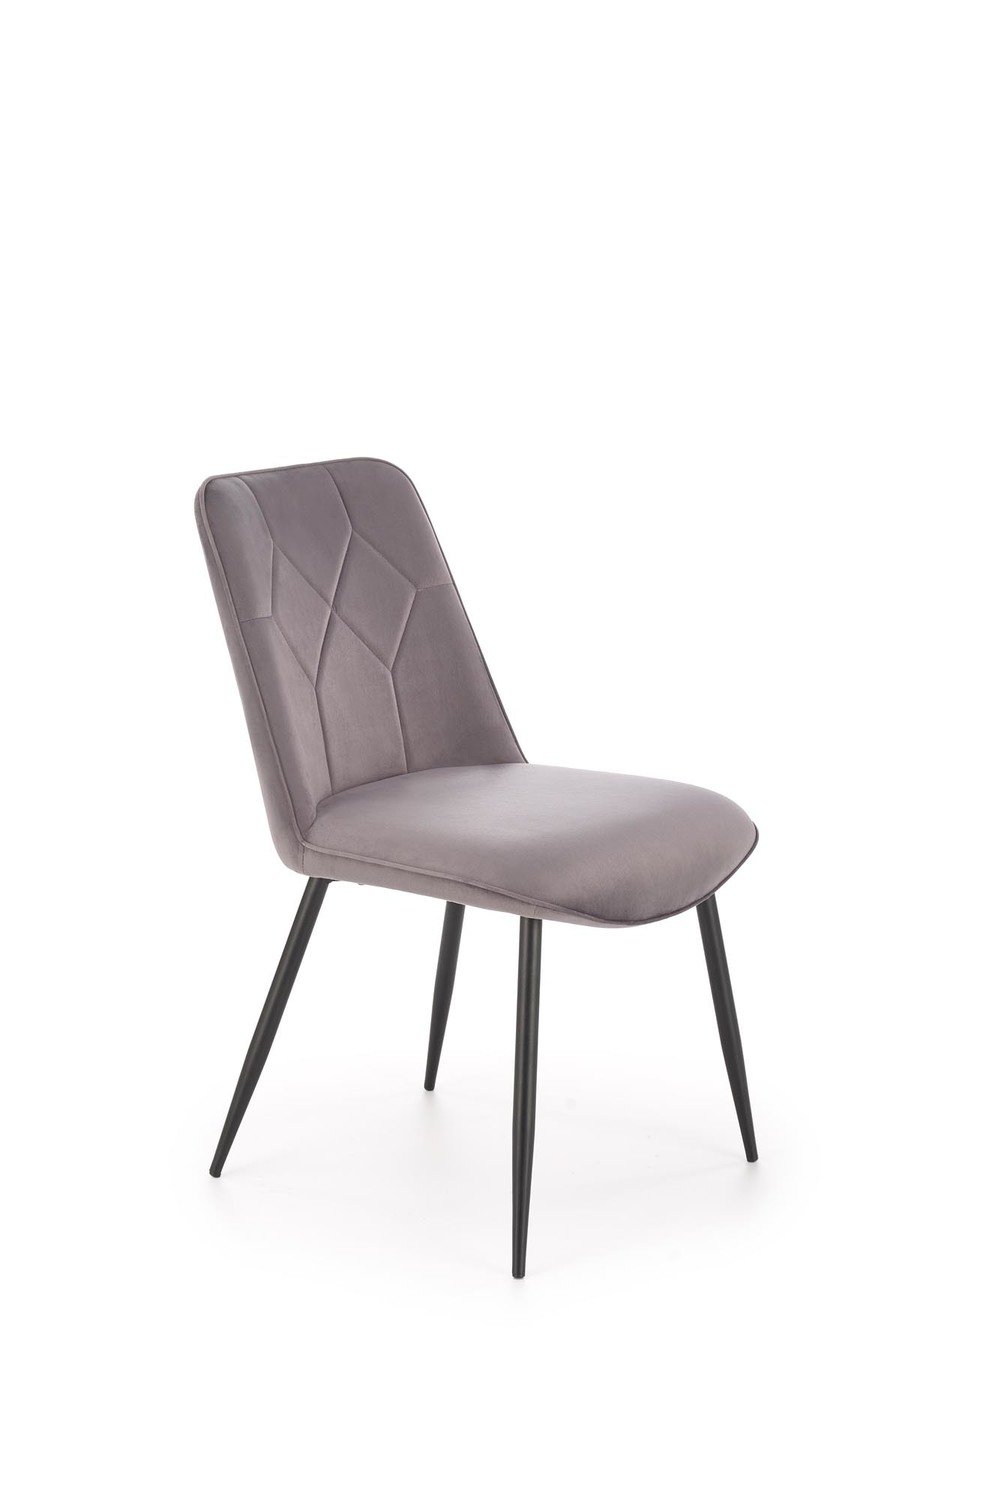 K539 chair, grey